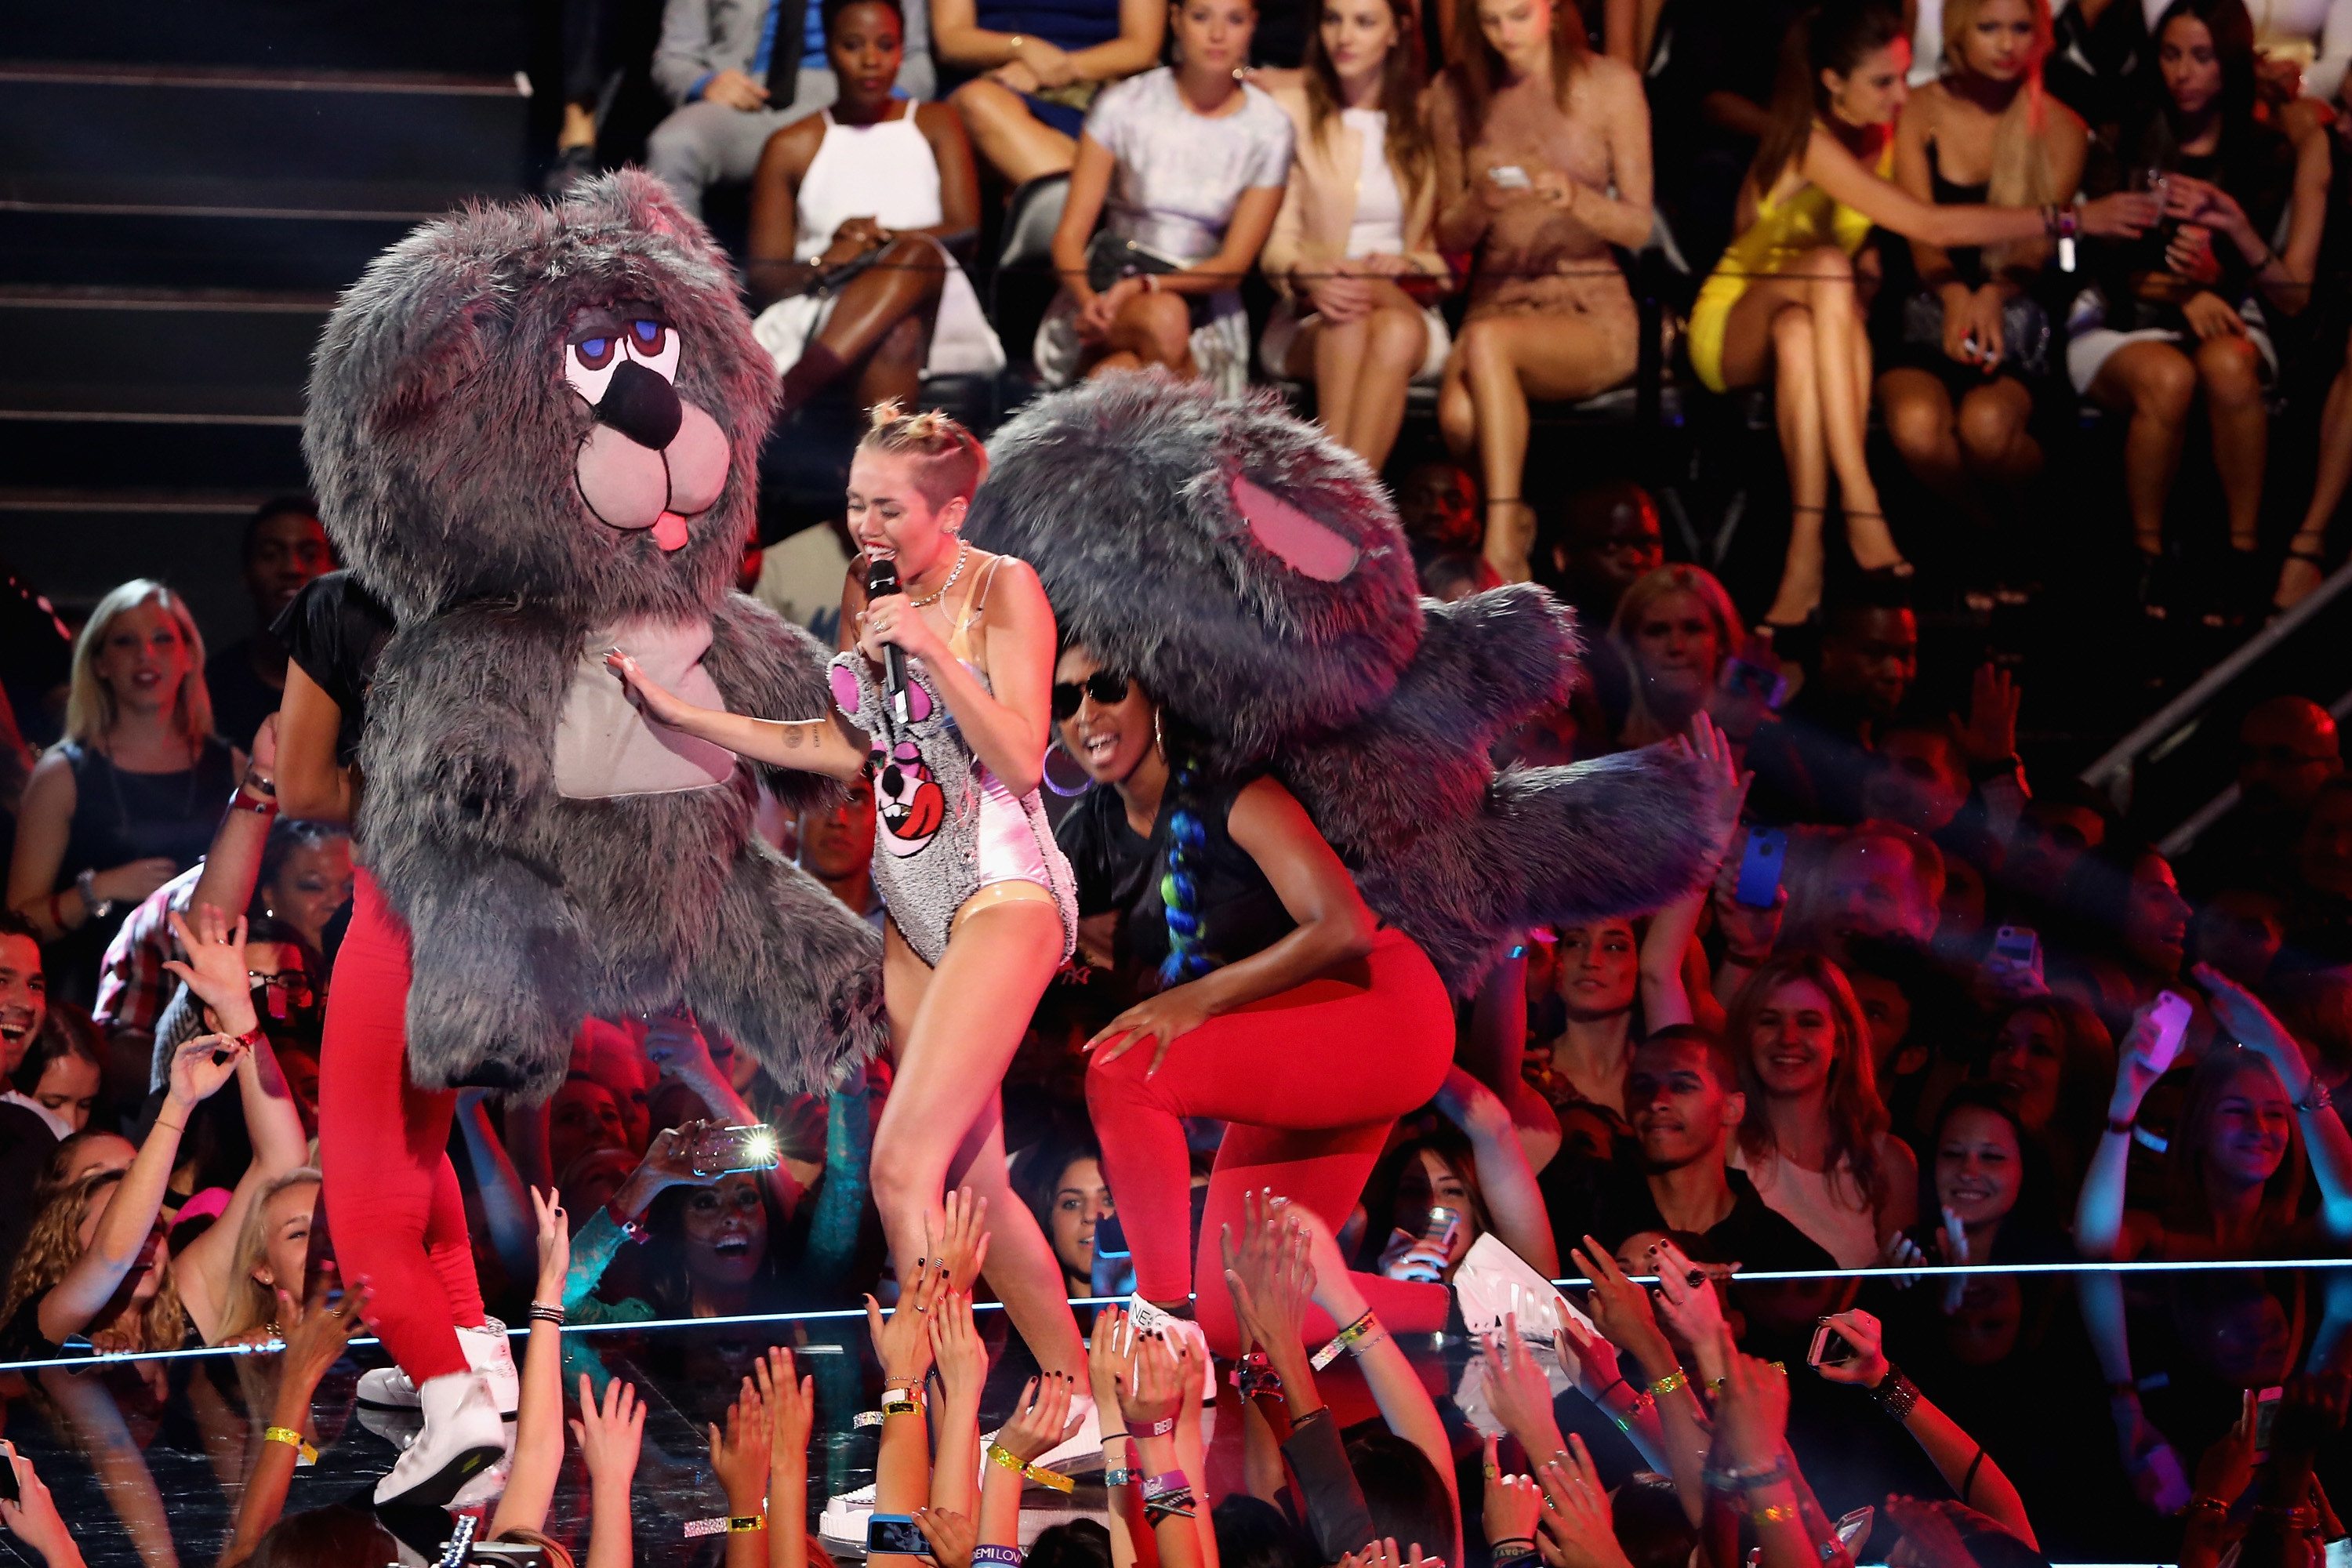 Dance bear com. Майли Сайрус VMA 2013. Miley Cyrus 2013 VMA Performance. VMA 2013 Майли Сайрус и Робин. MTV VMA 2013.